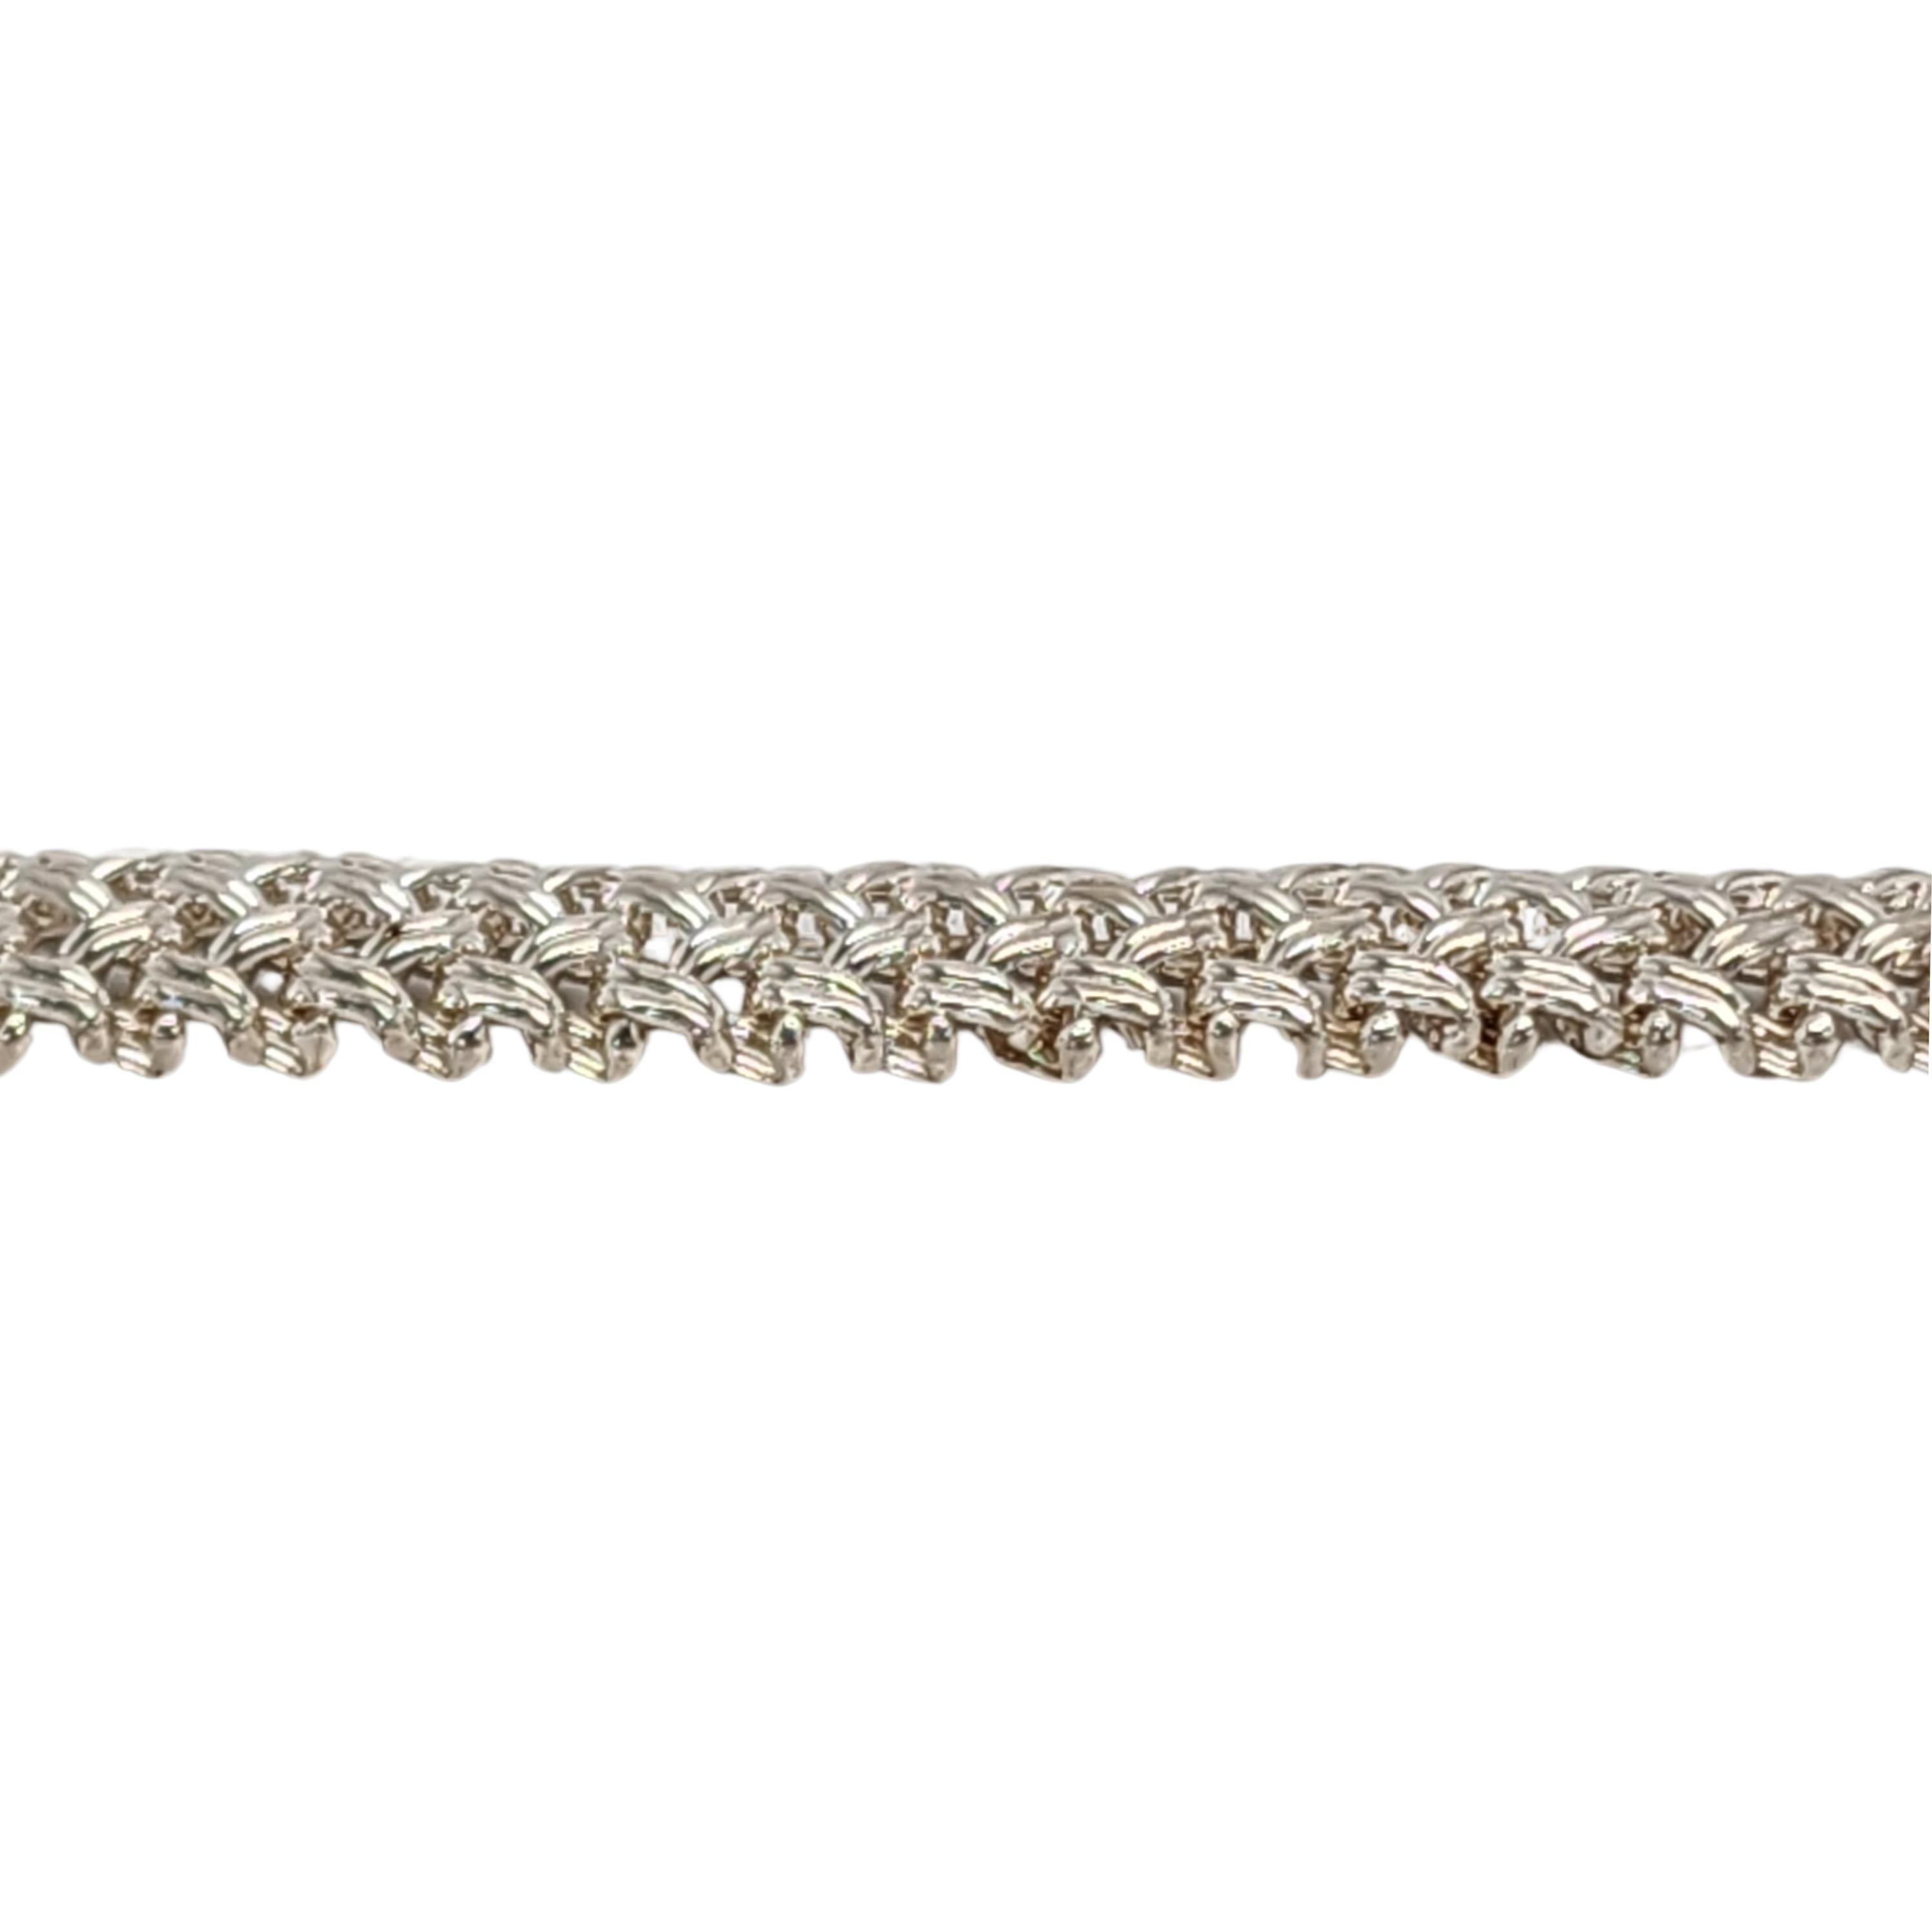 Women's Birks Sterling Silver Wide Flat Woven Chain Necklace 17.5